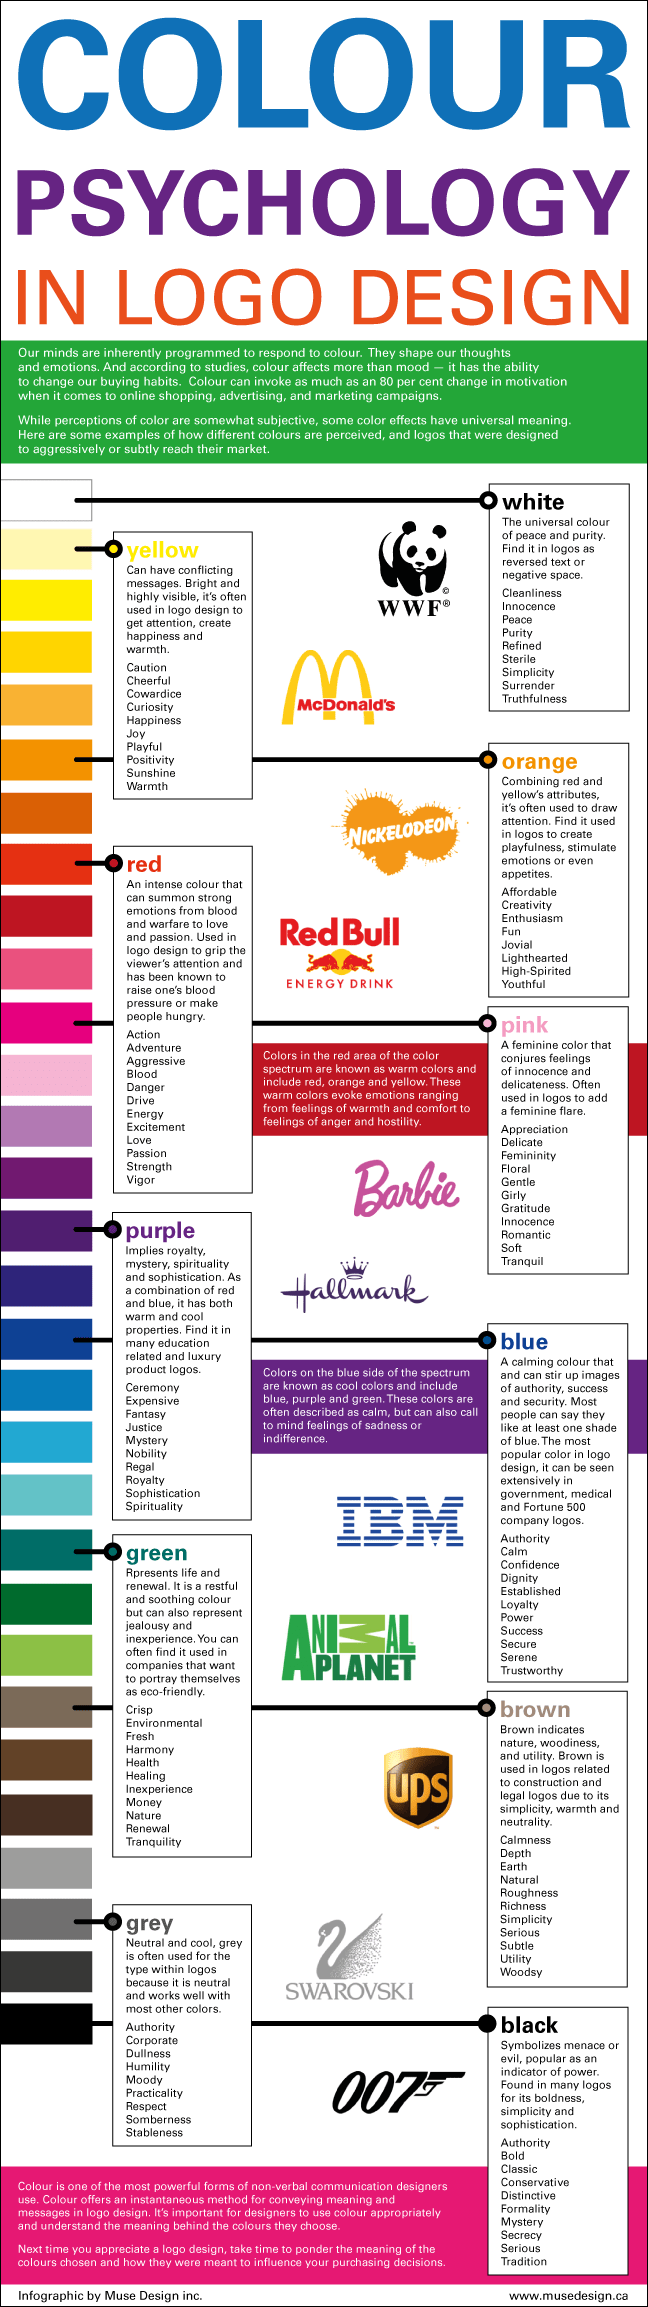 Colour-Psychology-Infographic